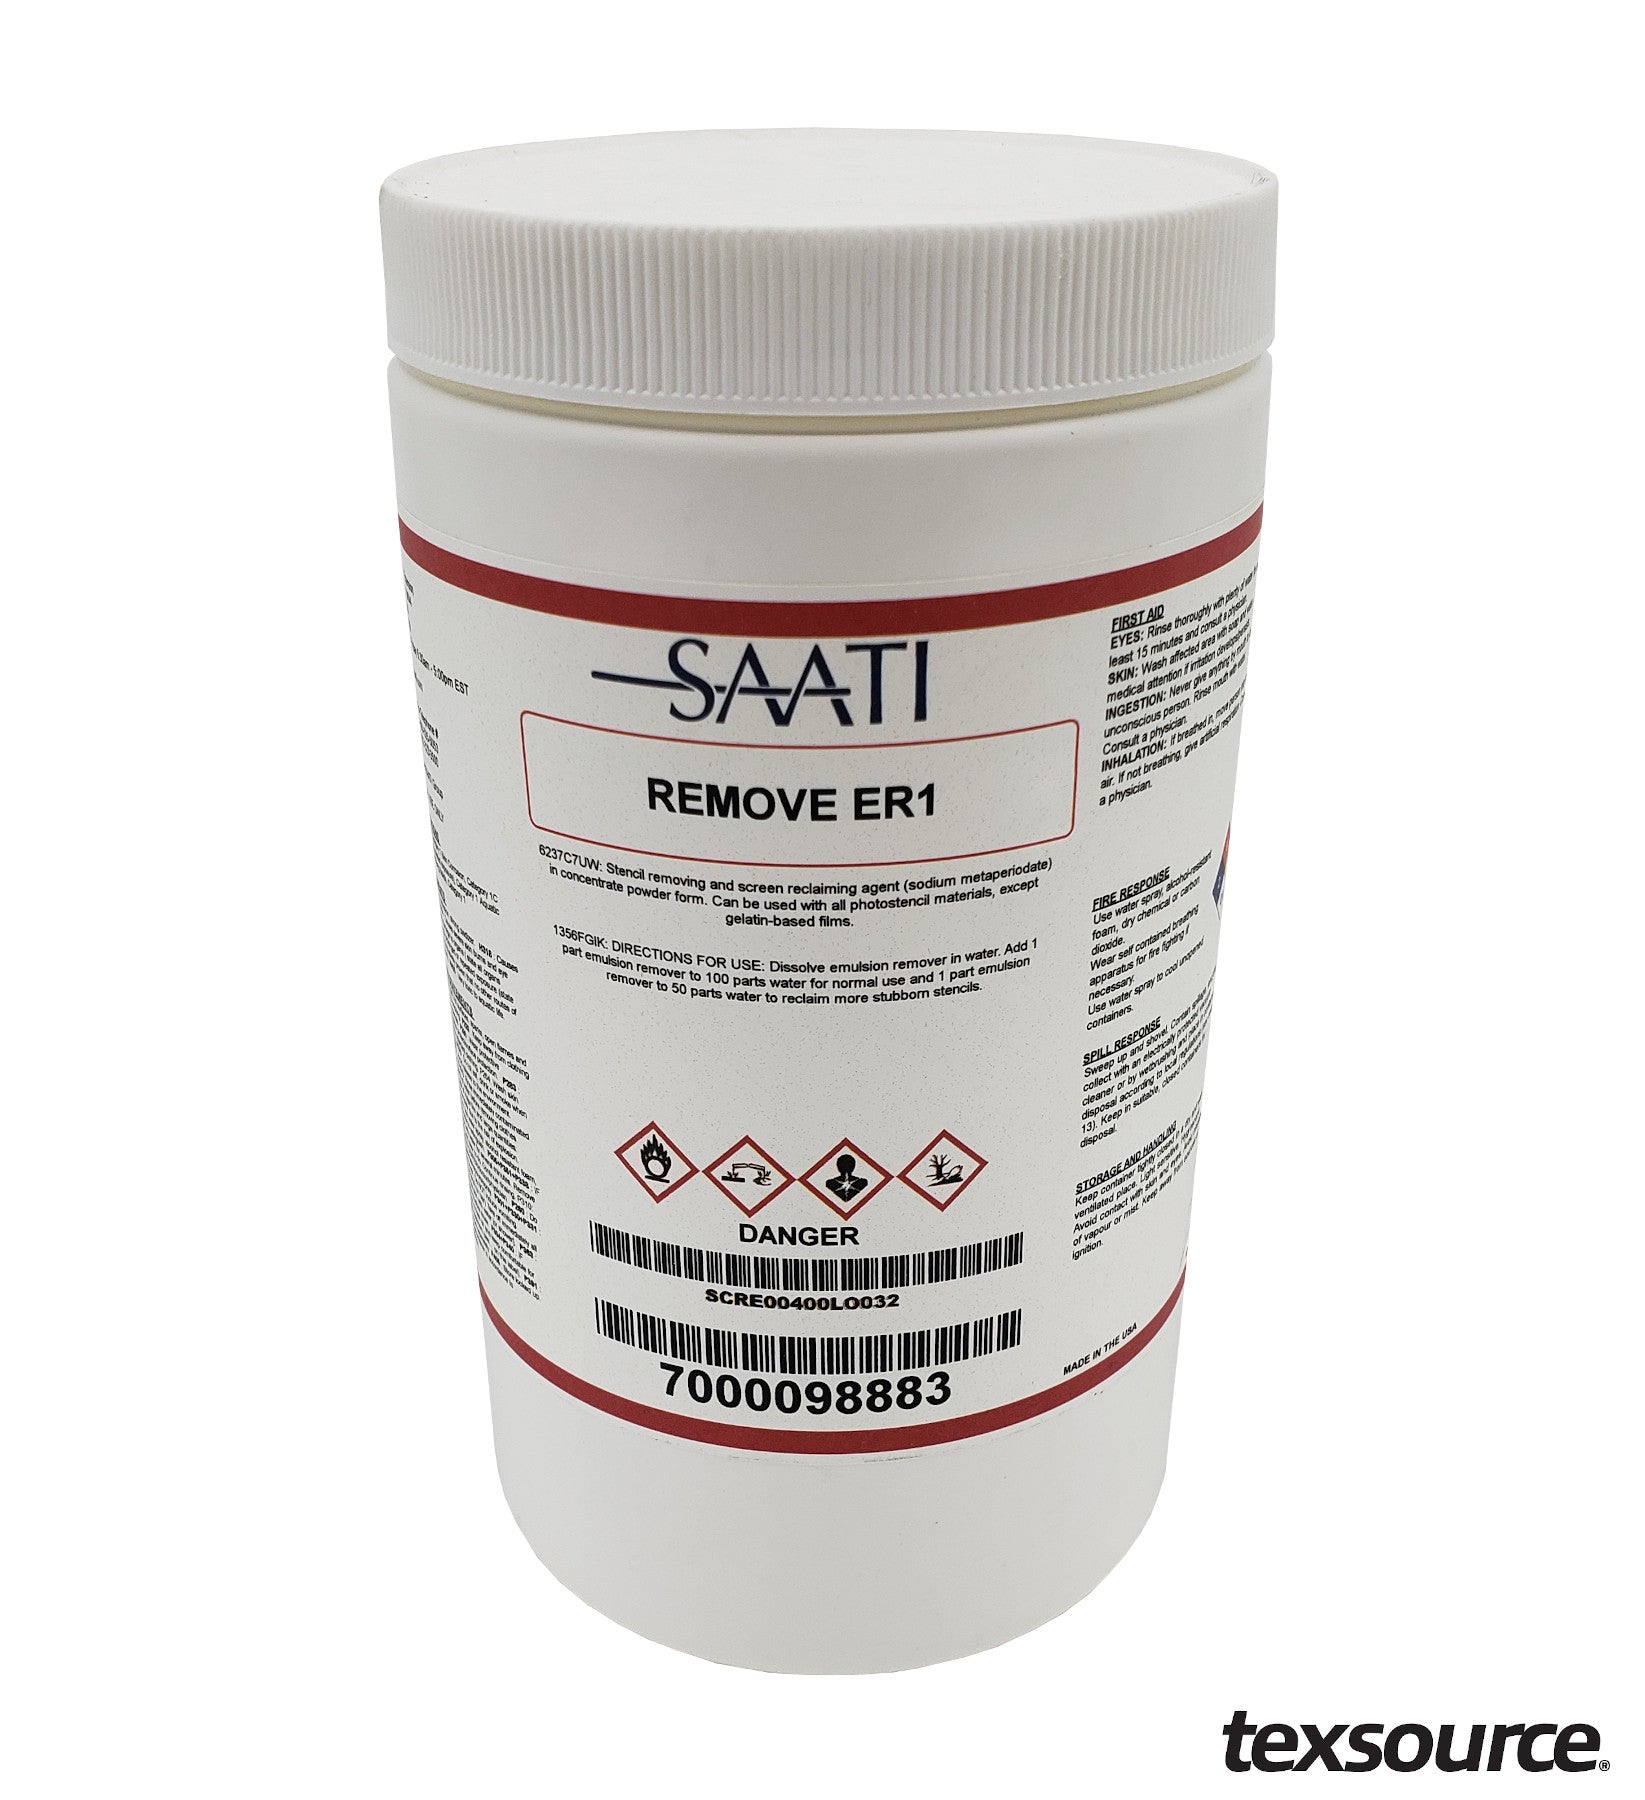 Saati Emulsion Remover ER6 for Screen Printing